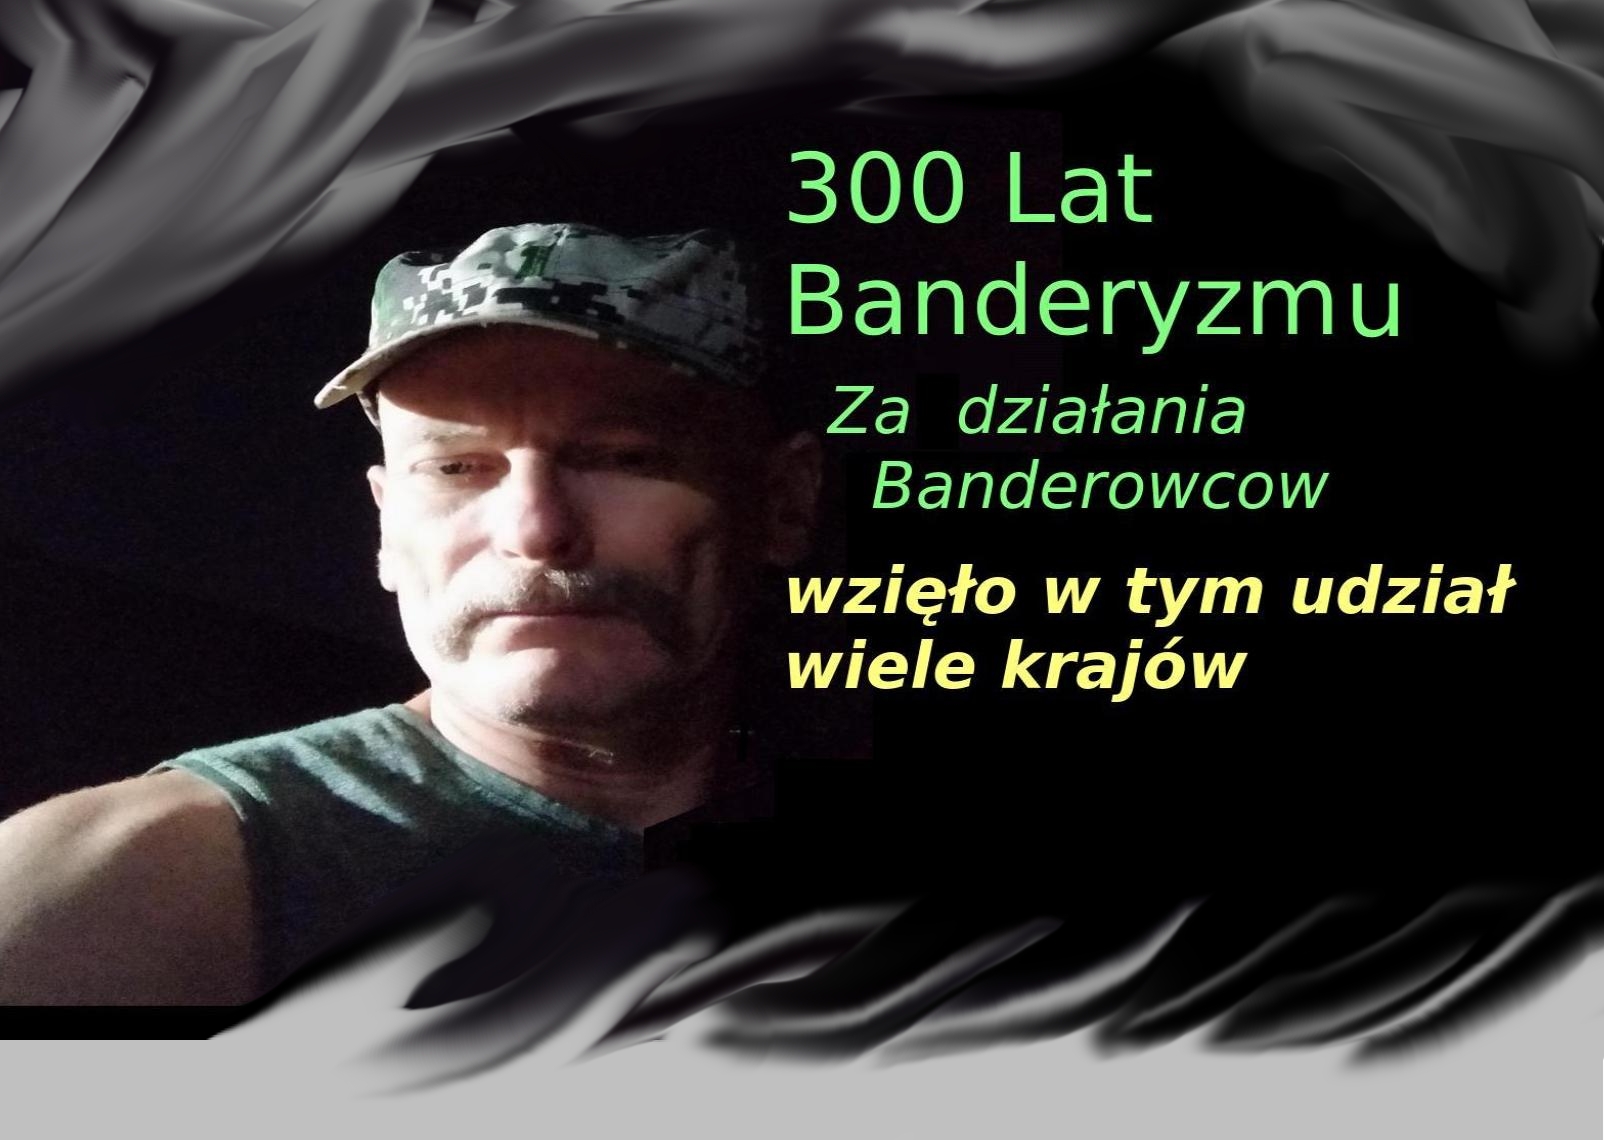 300 Lat Banderyzmu